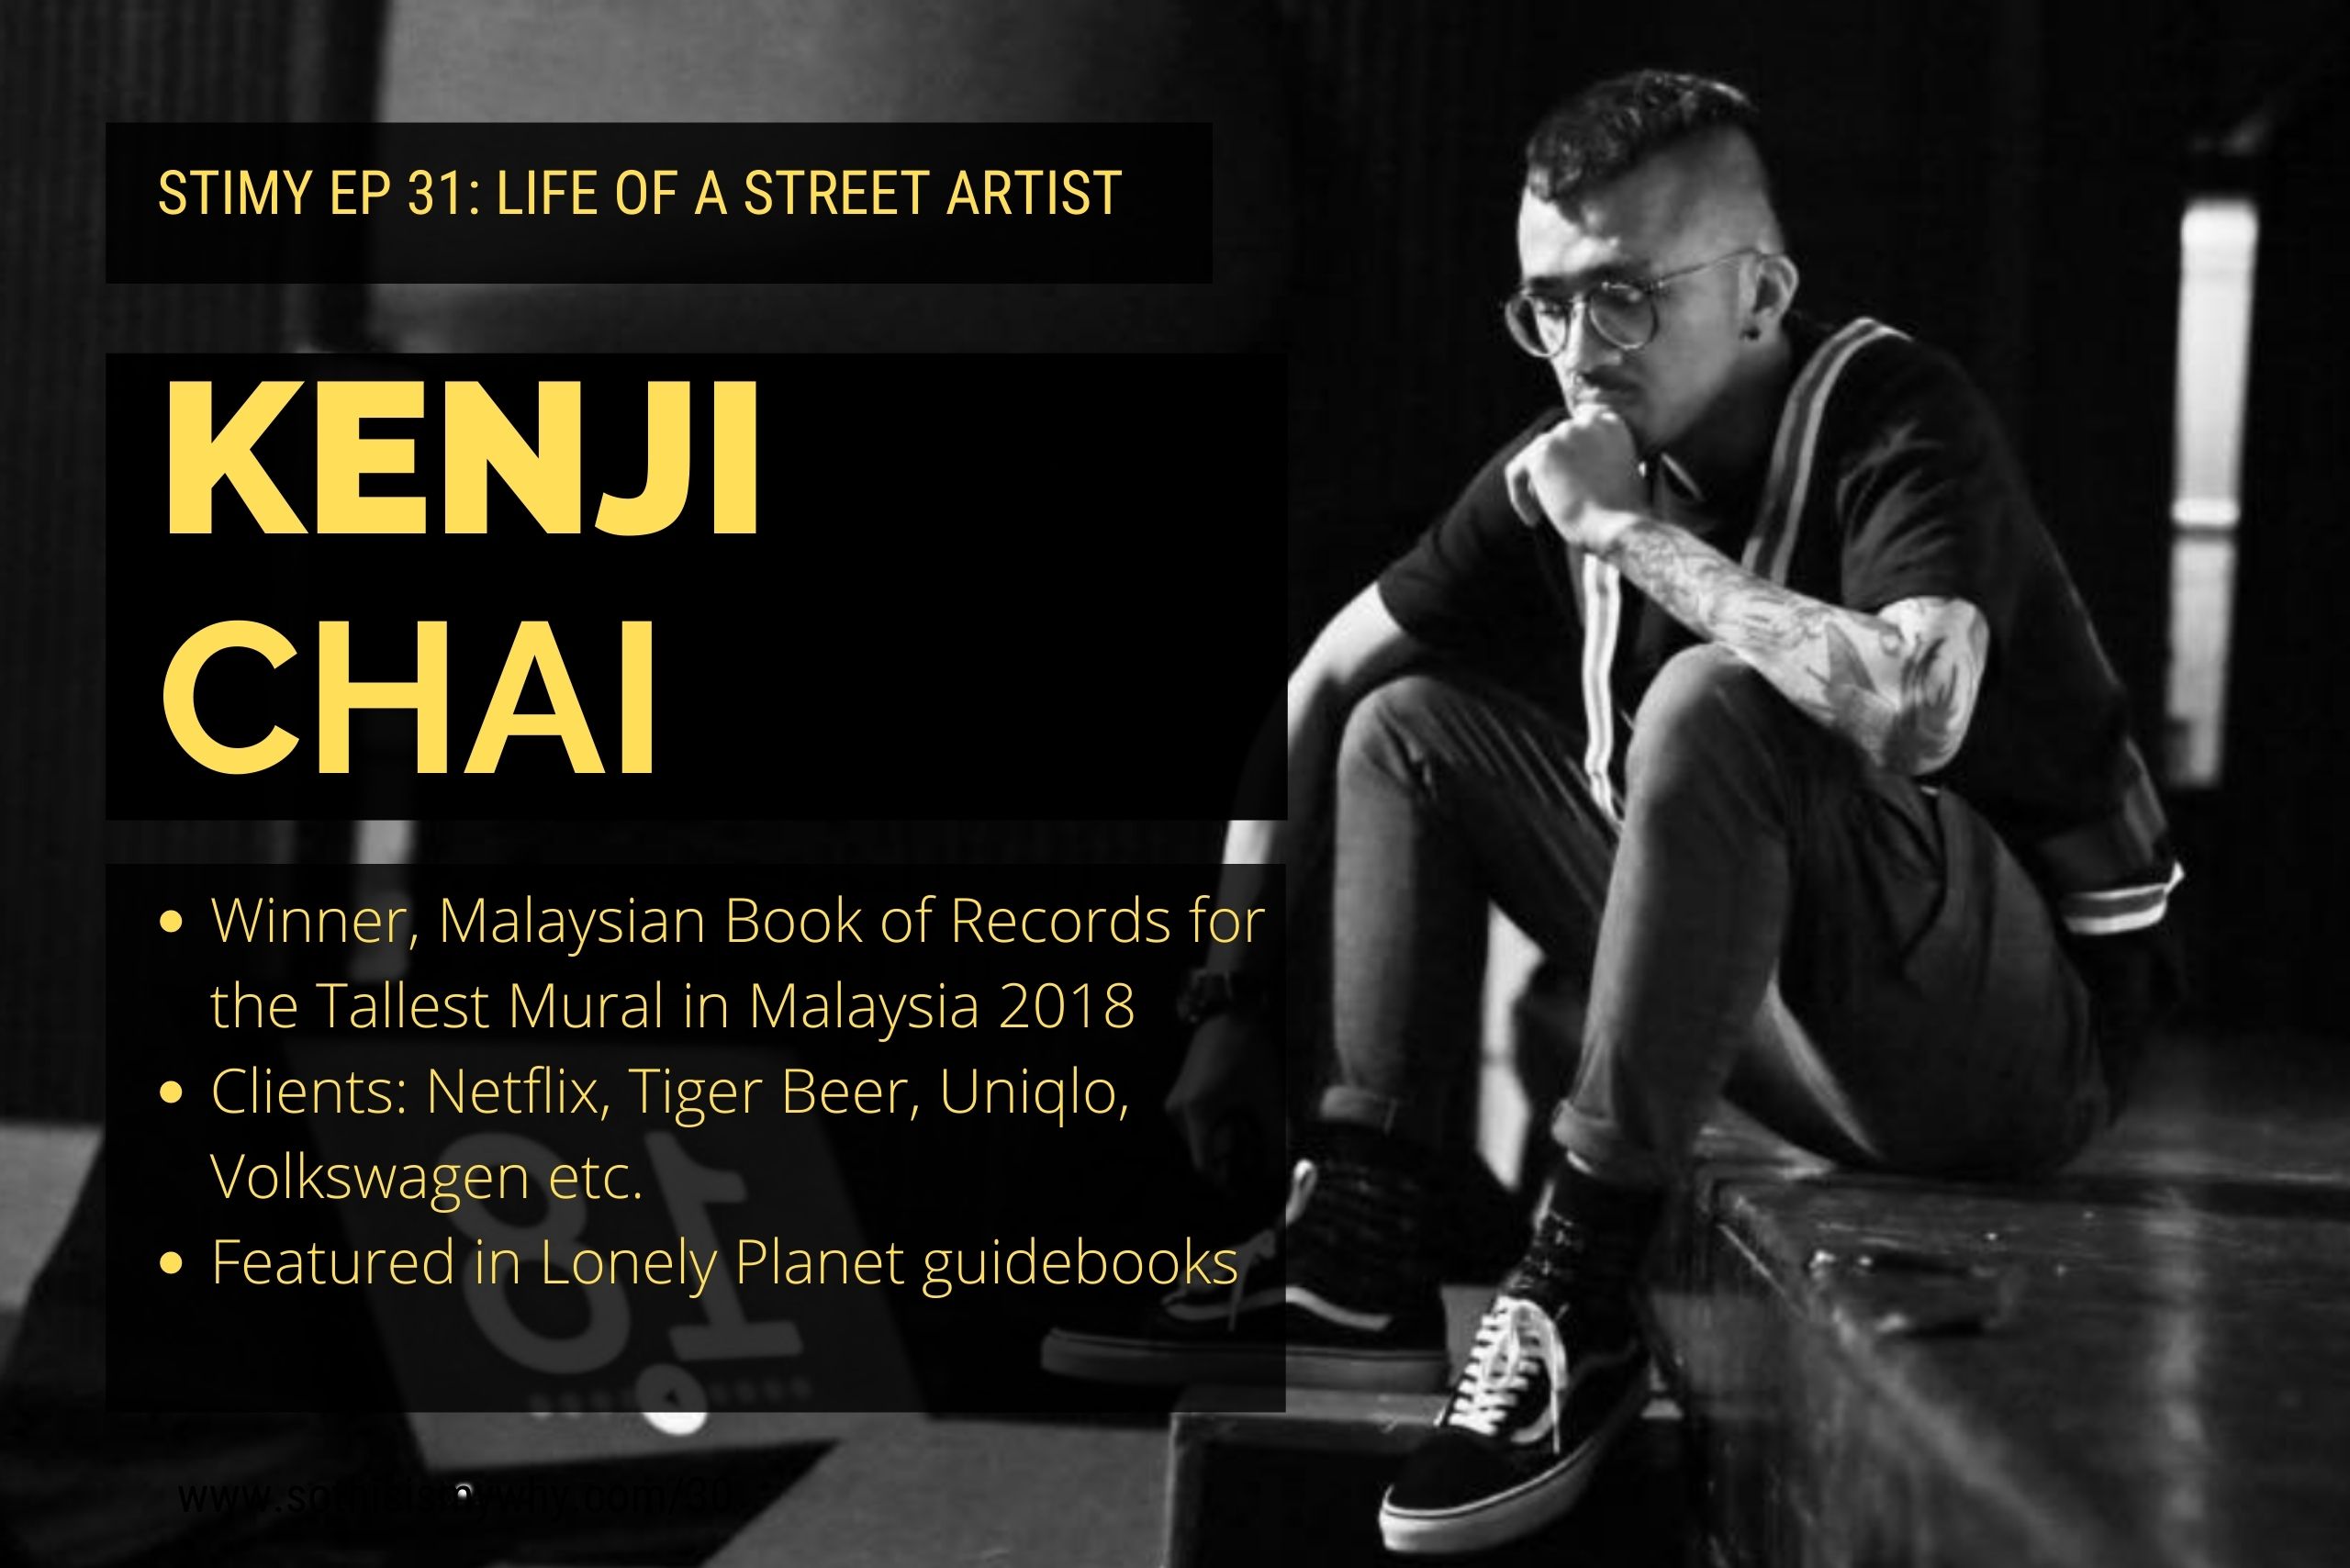 Kenji Chai Vui Yung - Malaysian graffiti artist, mural artist ("Chaigo" dog alter ego)